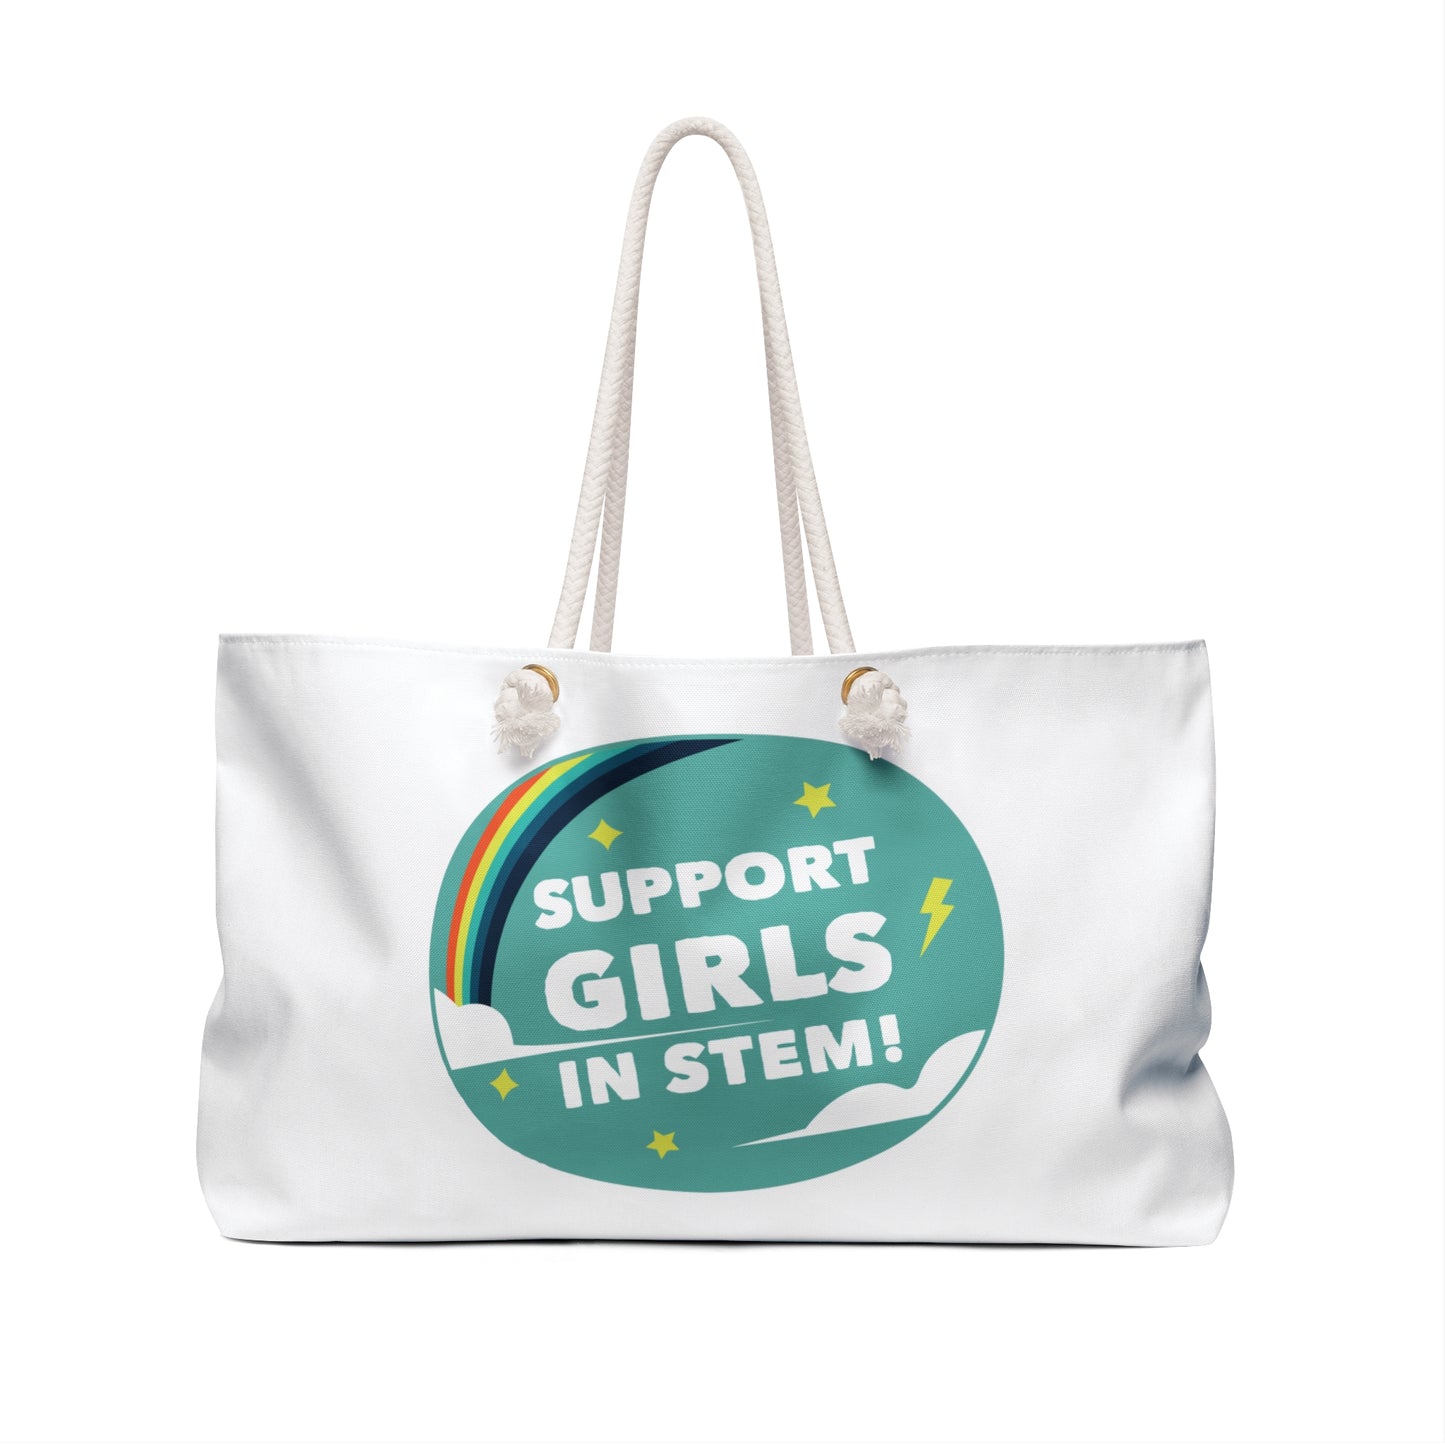 Support Girls in STEM Weekender Bag